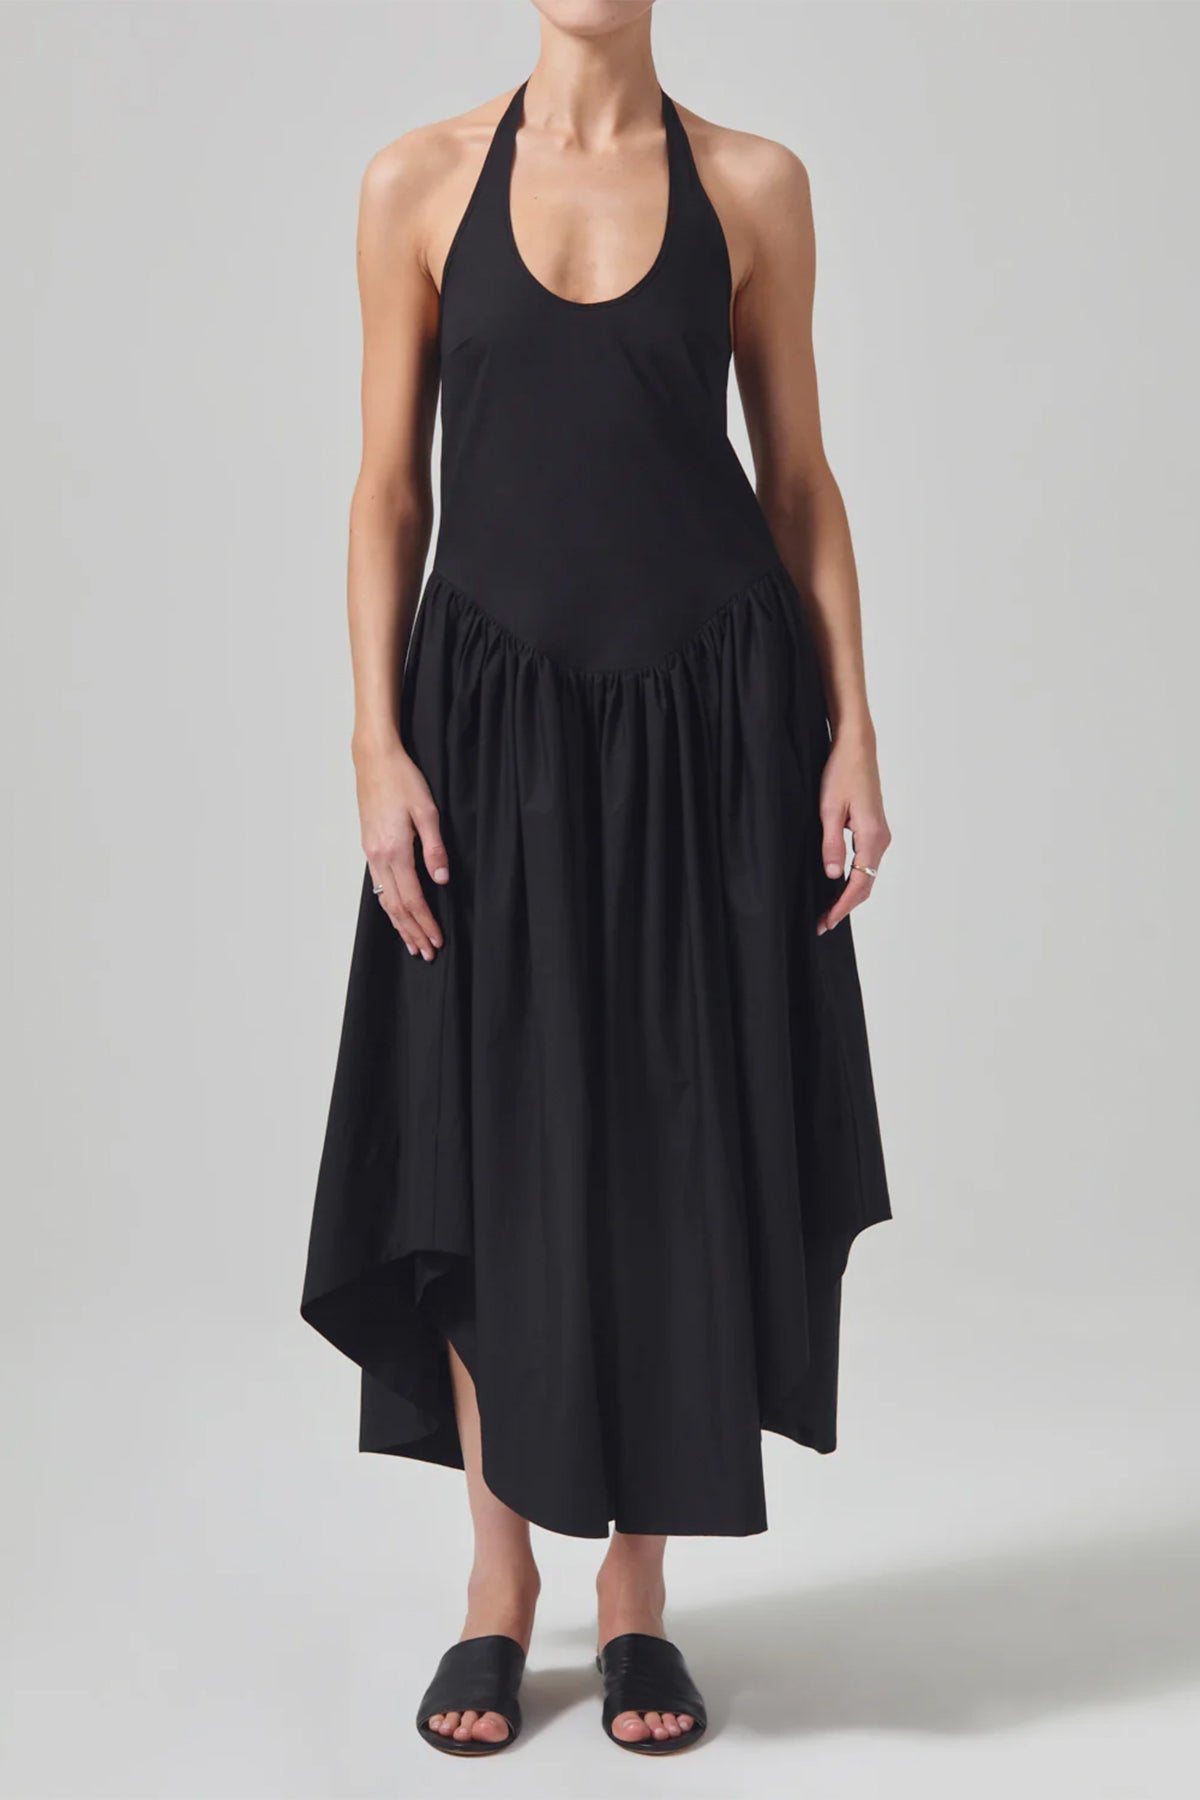 Poppi Halter Dress in Black - shop-olivia.com